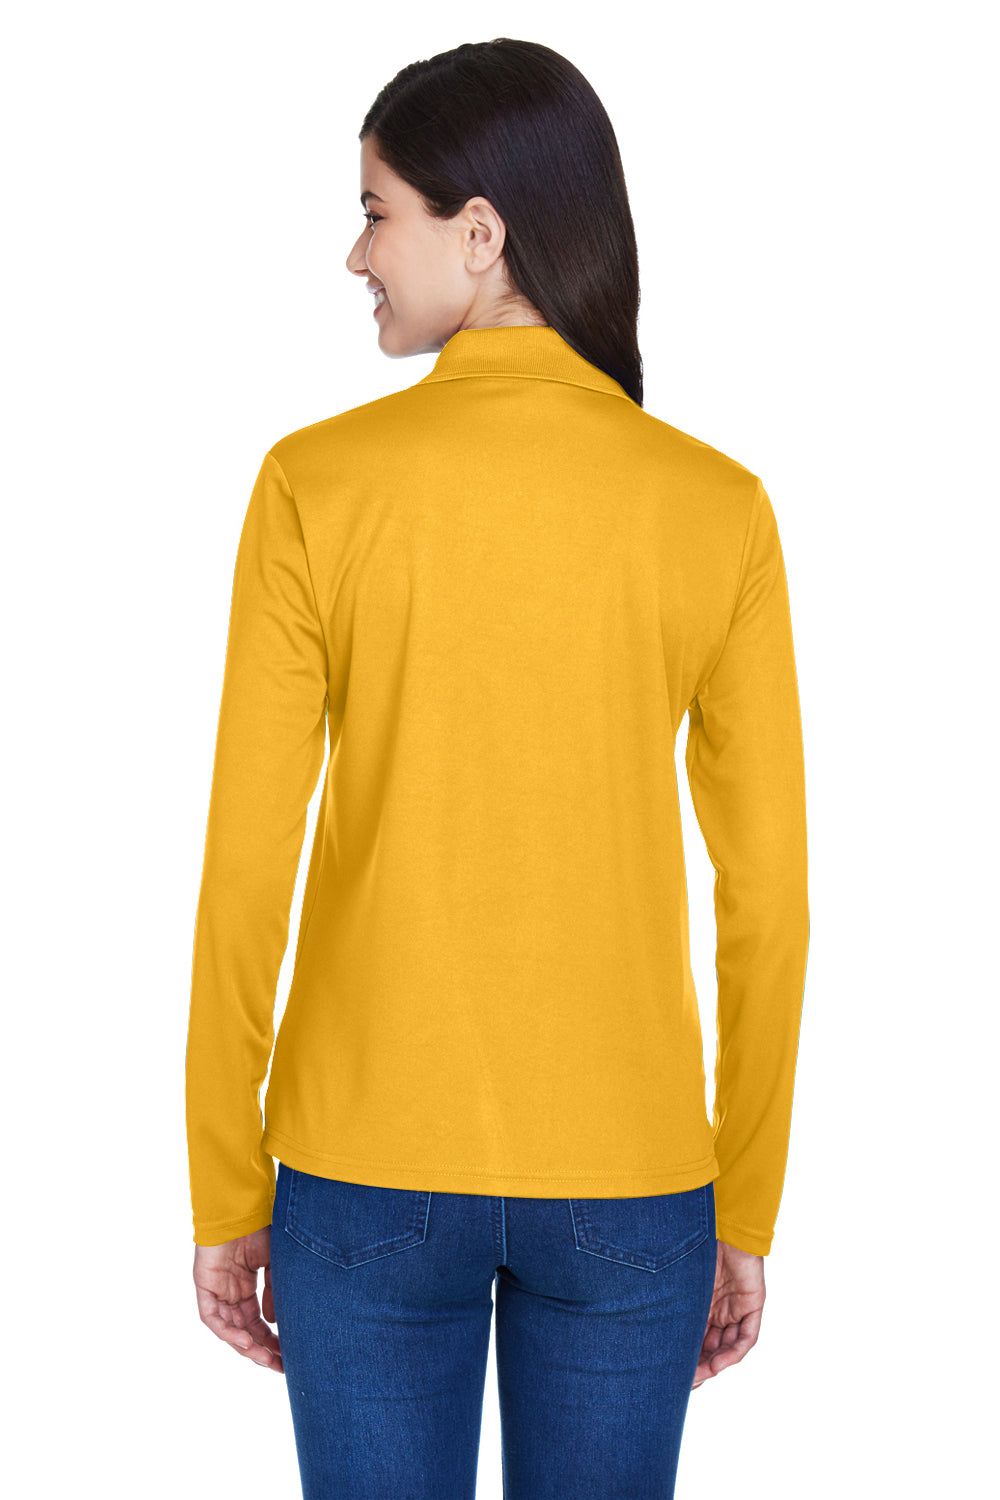 Core 365 78192 Womens Pinnacle Performance Moisture Wicking Long Sleeve Polo Shirt Gold Back